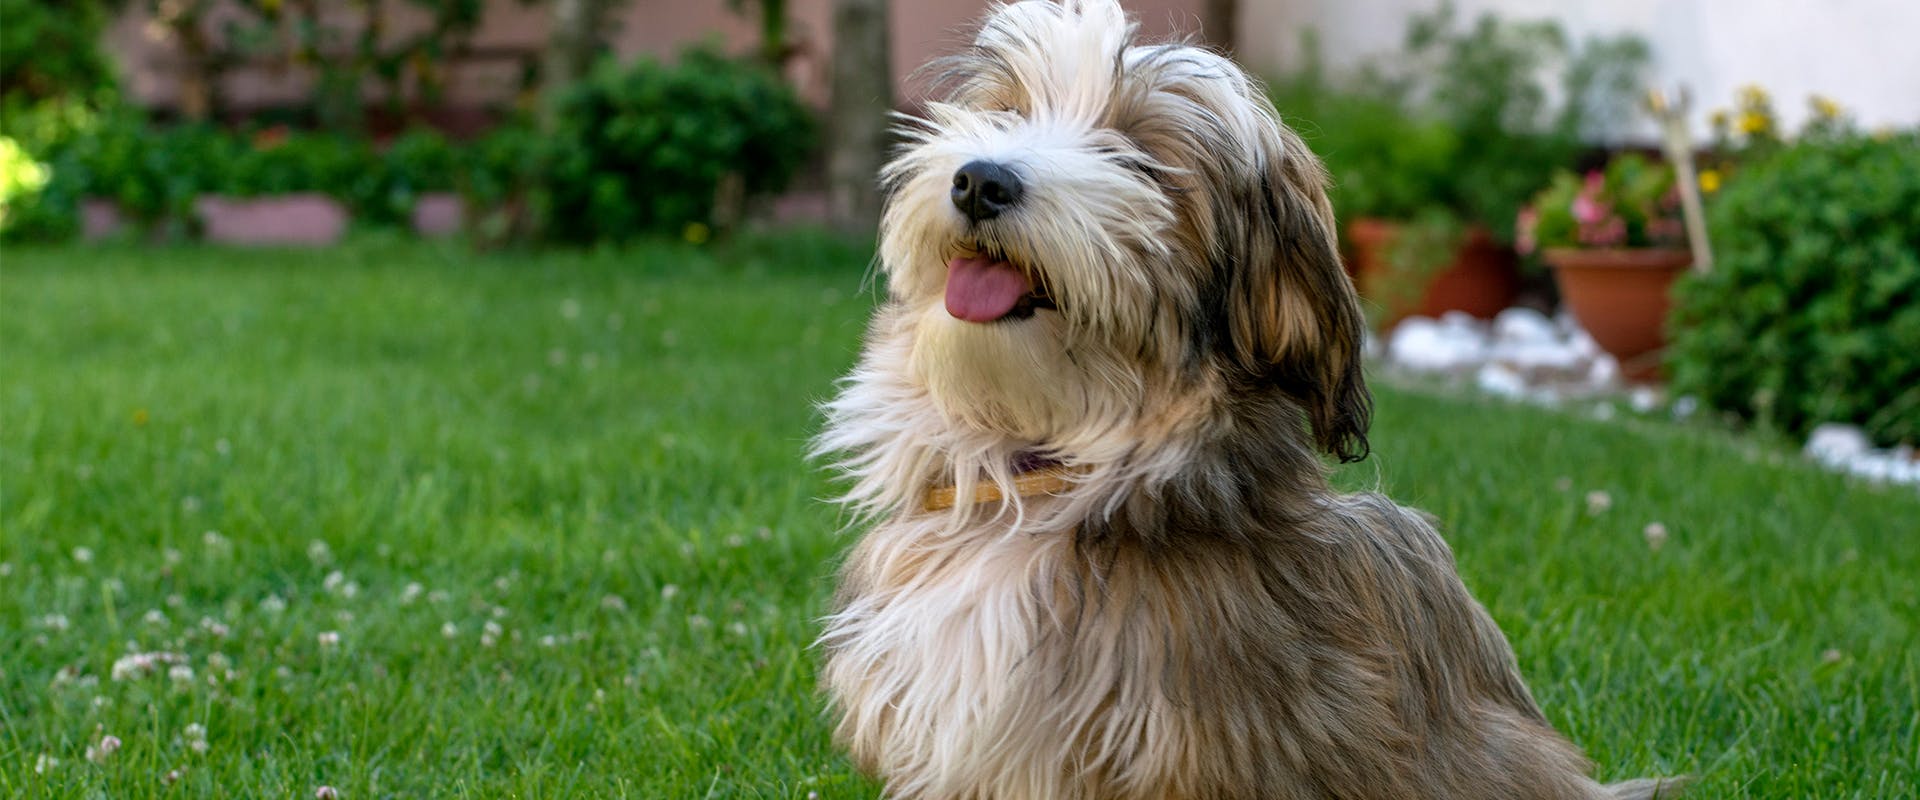 A happy looking Havanese dog sitting in a back yard